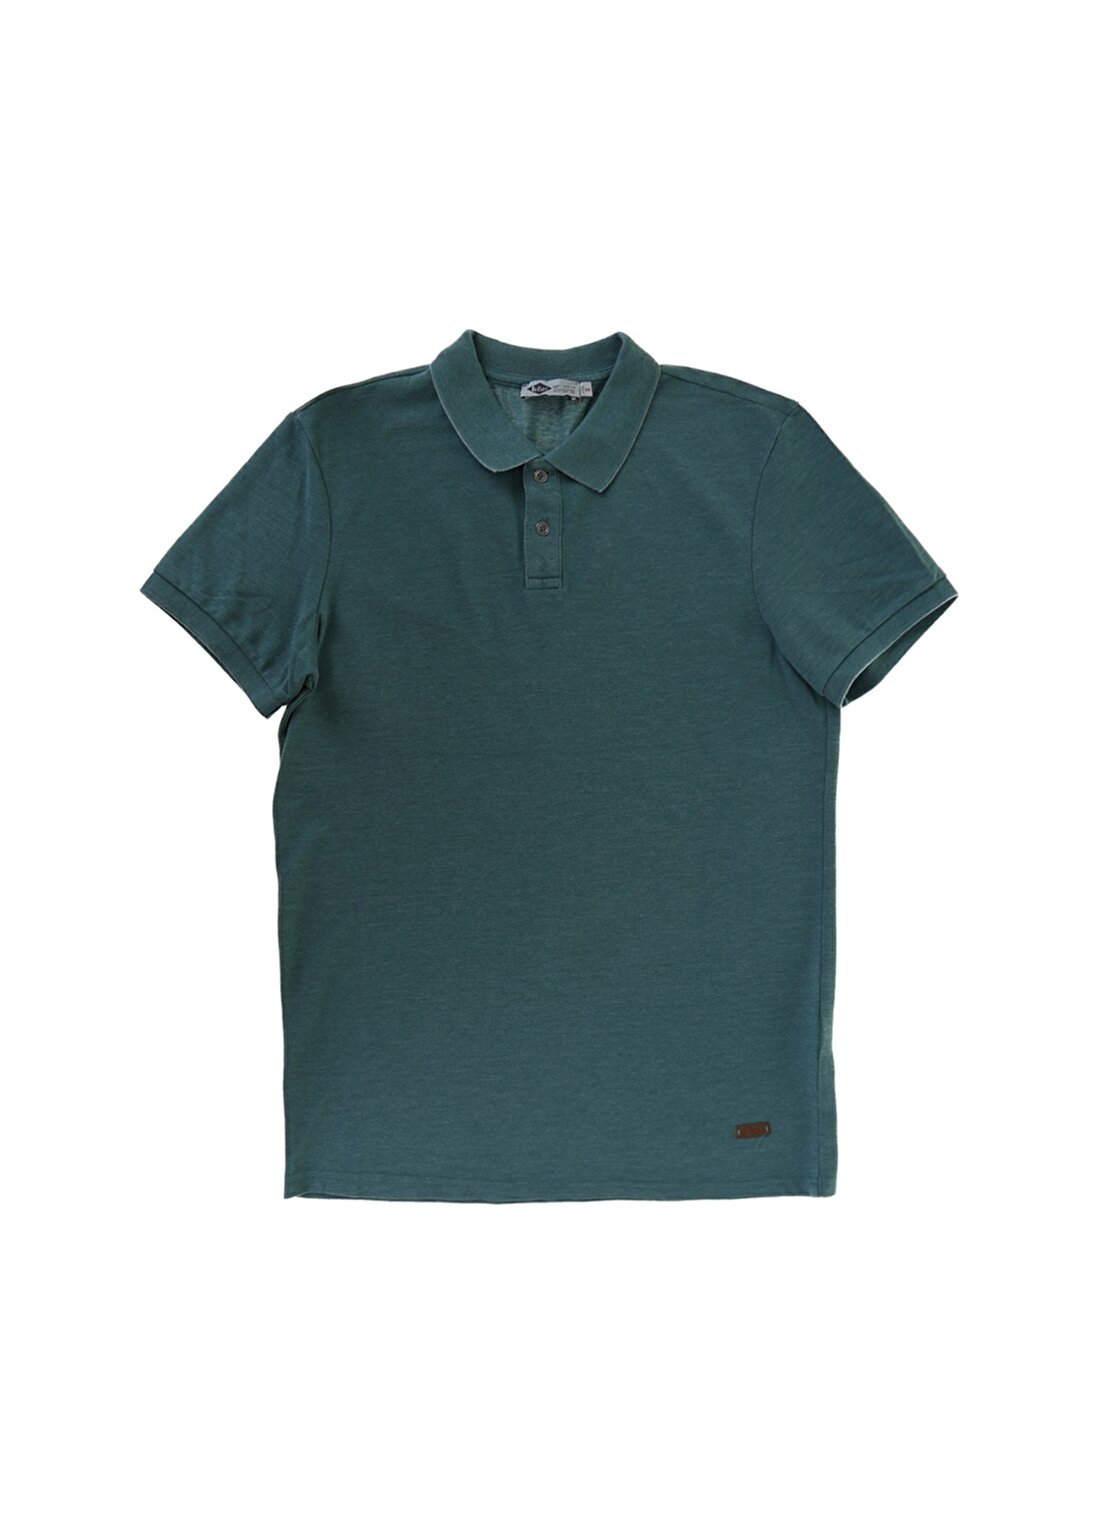 Lee Cooper Düz Yeşil Erkek Polo T-Shirt 202 LCM 242052 MILESS POLO YESIL